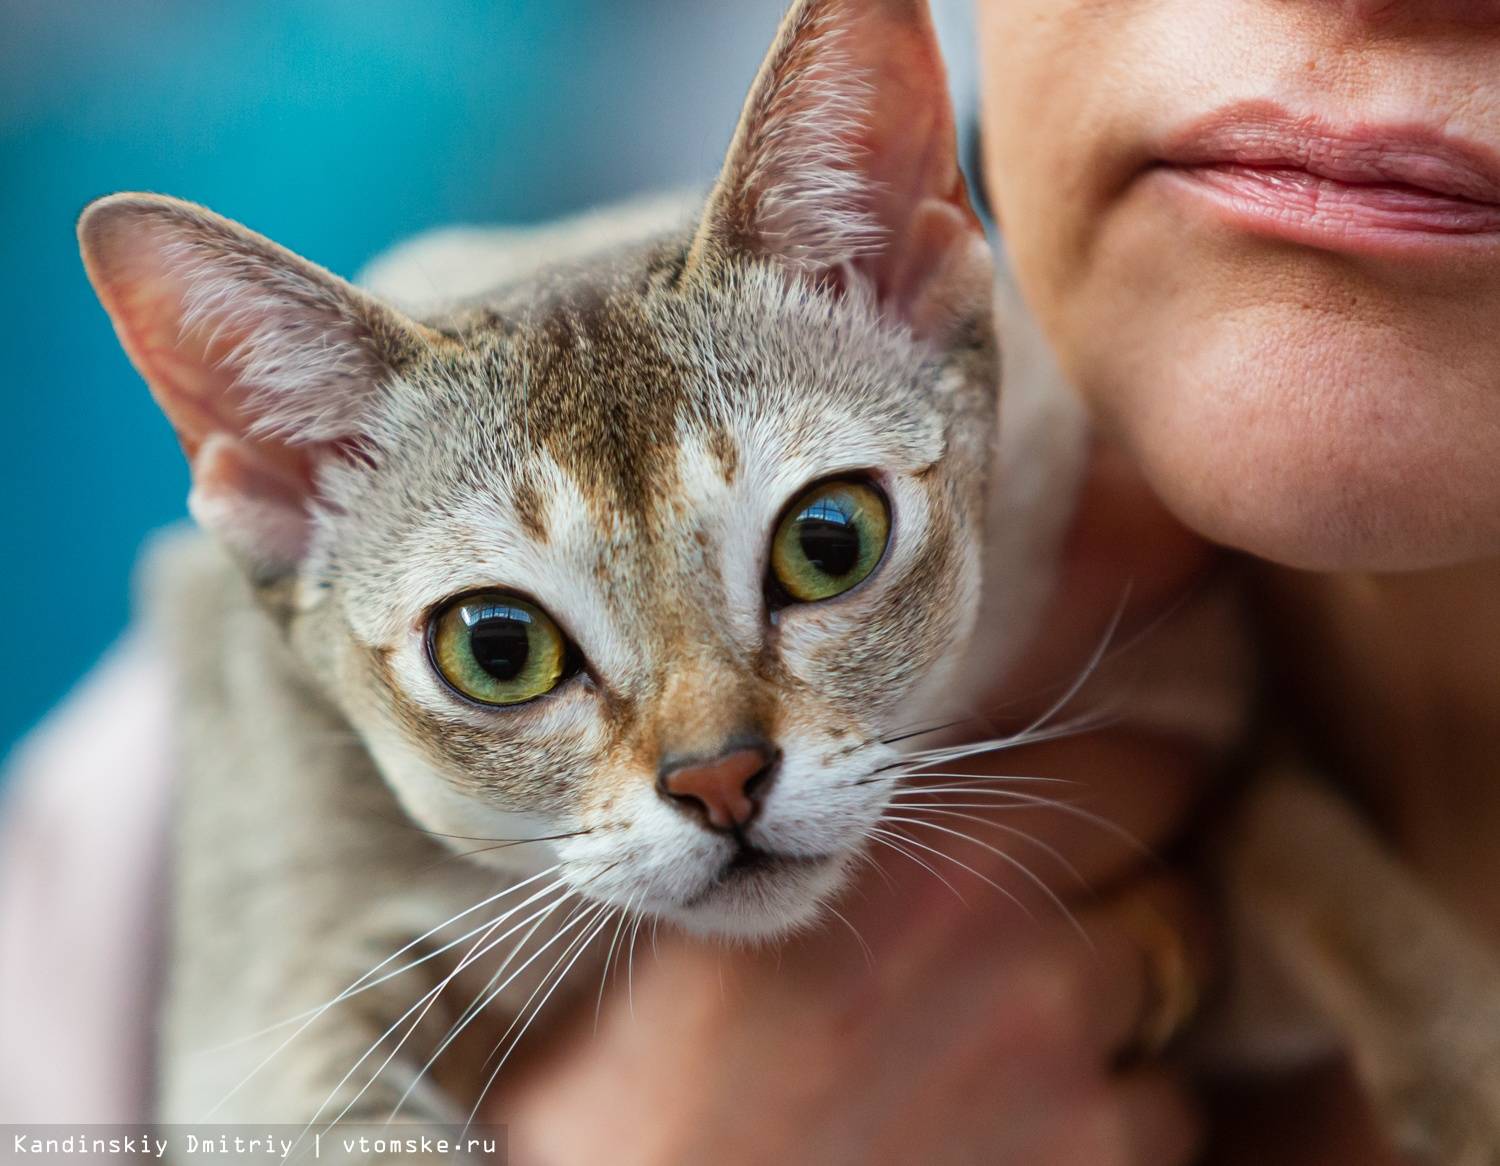 Сингапурская (сингапура) кошка: описание породы, характер, содержание и уход, цена, фото